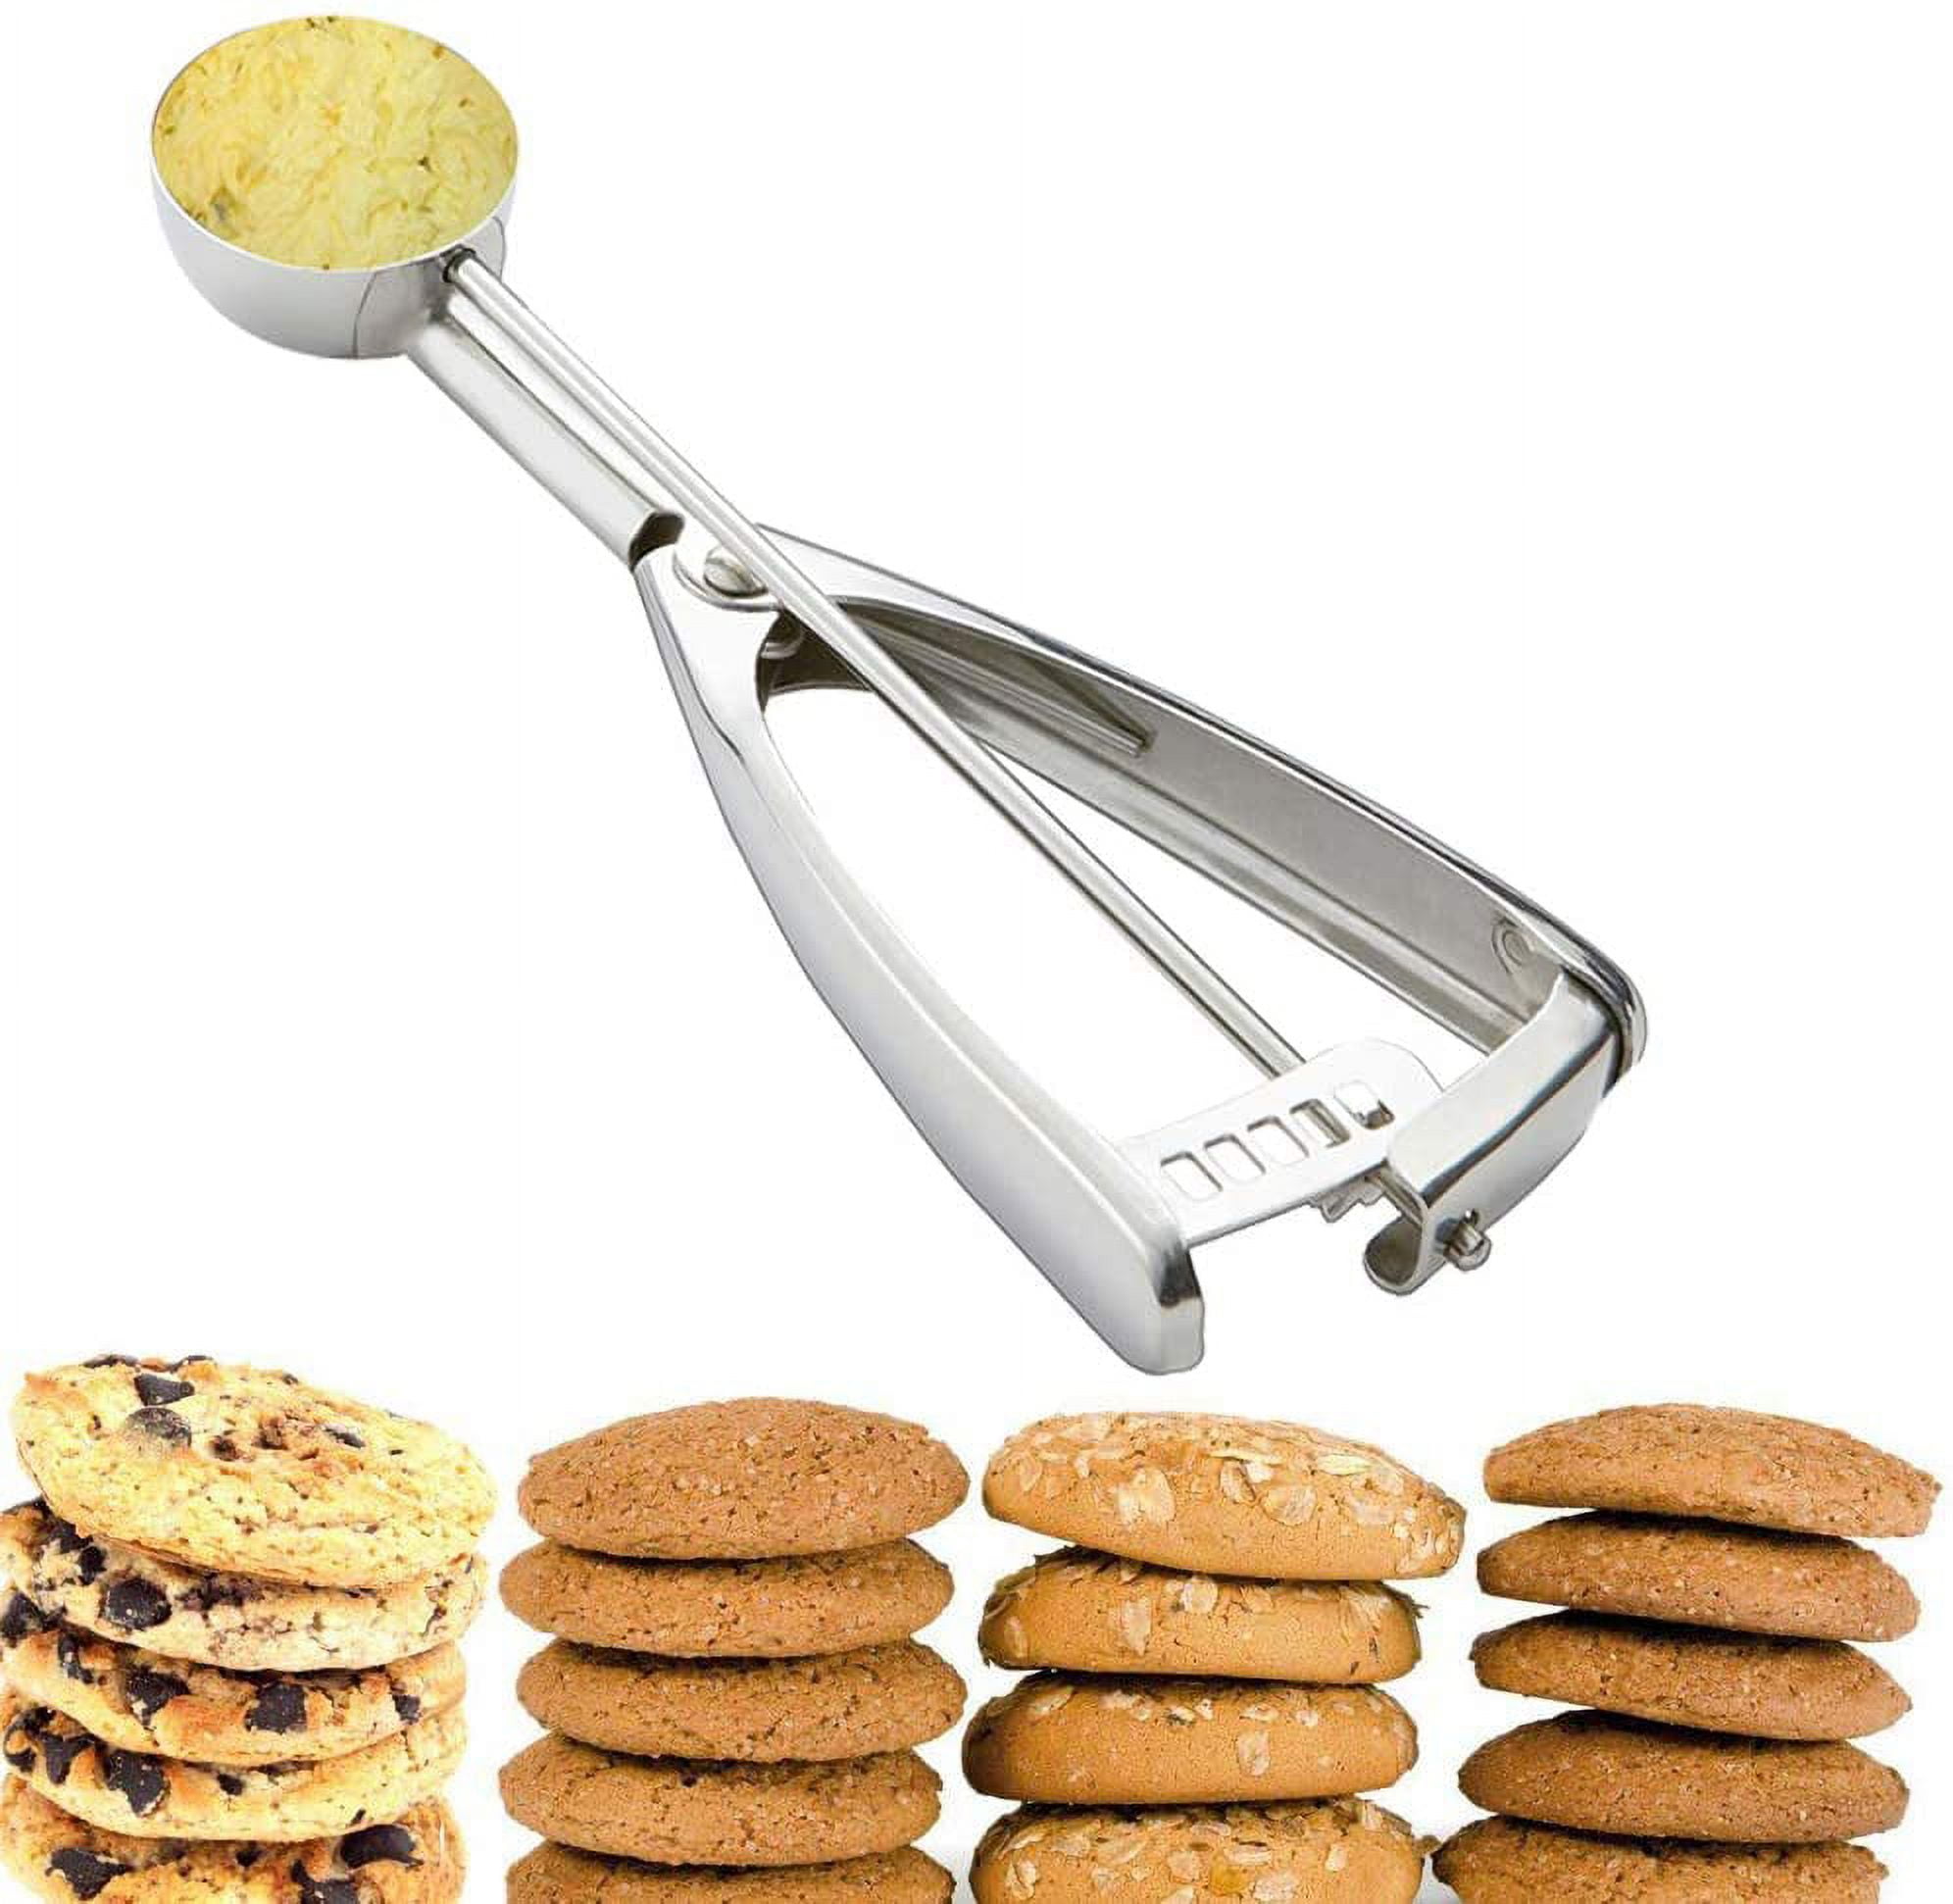 GOWA Cookie Scoop Set, 3pcs Cookie Scoops Include Small/3 tsp, Medium/1.5 Tbsp, Large/2.8 Tbsp, 18/8 Stainless Steel Ice Cream Scoop